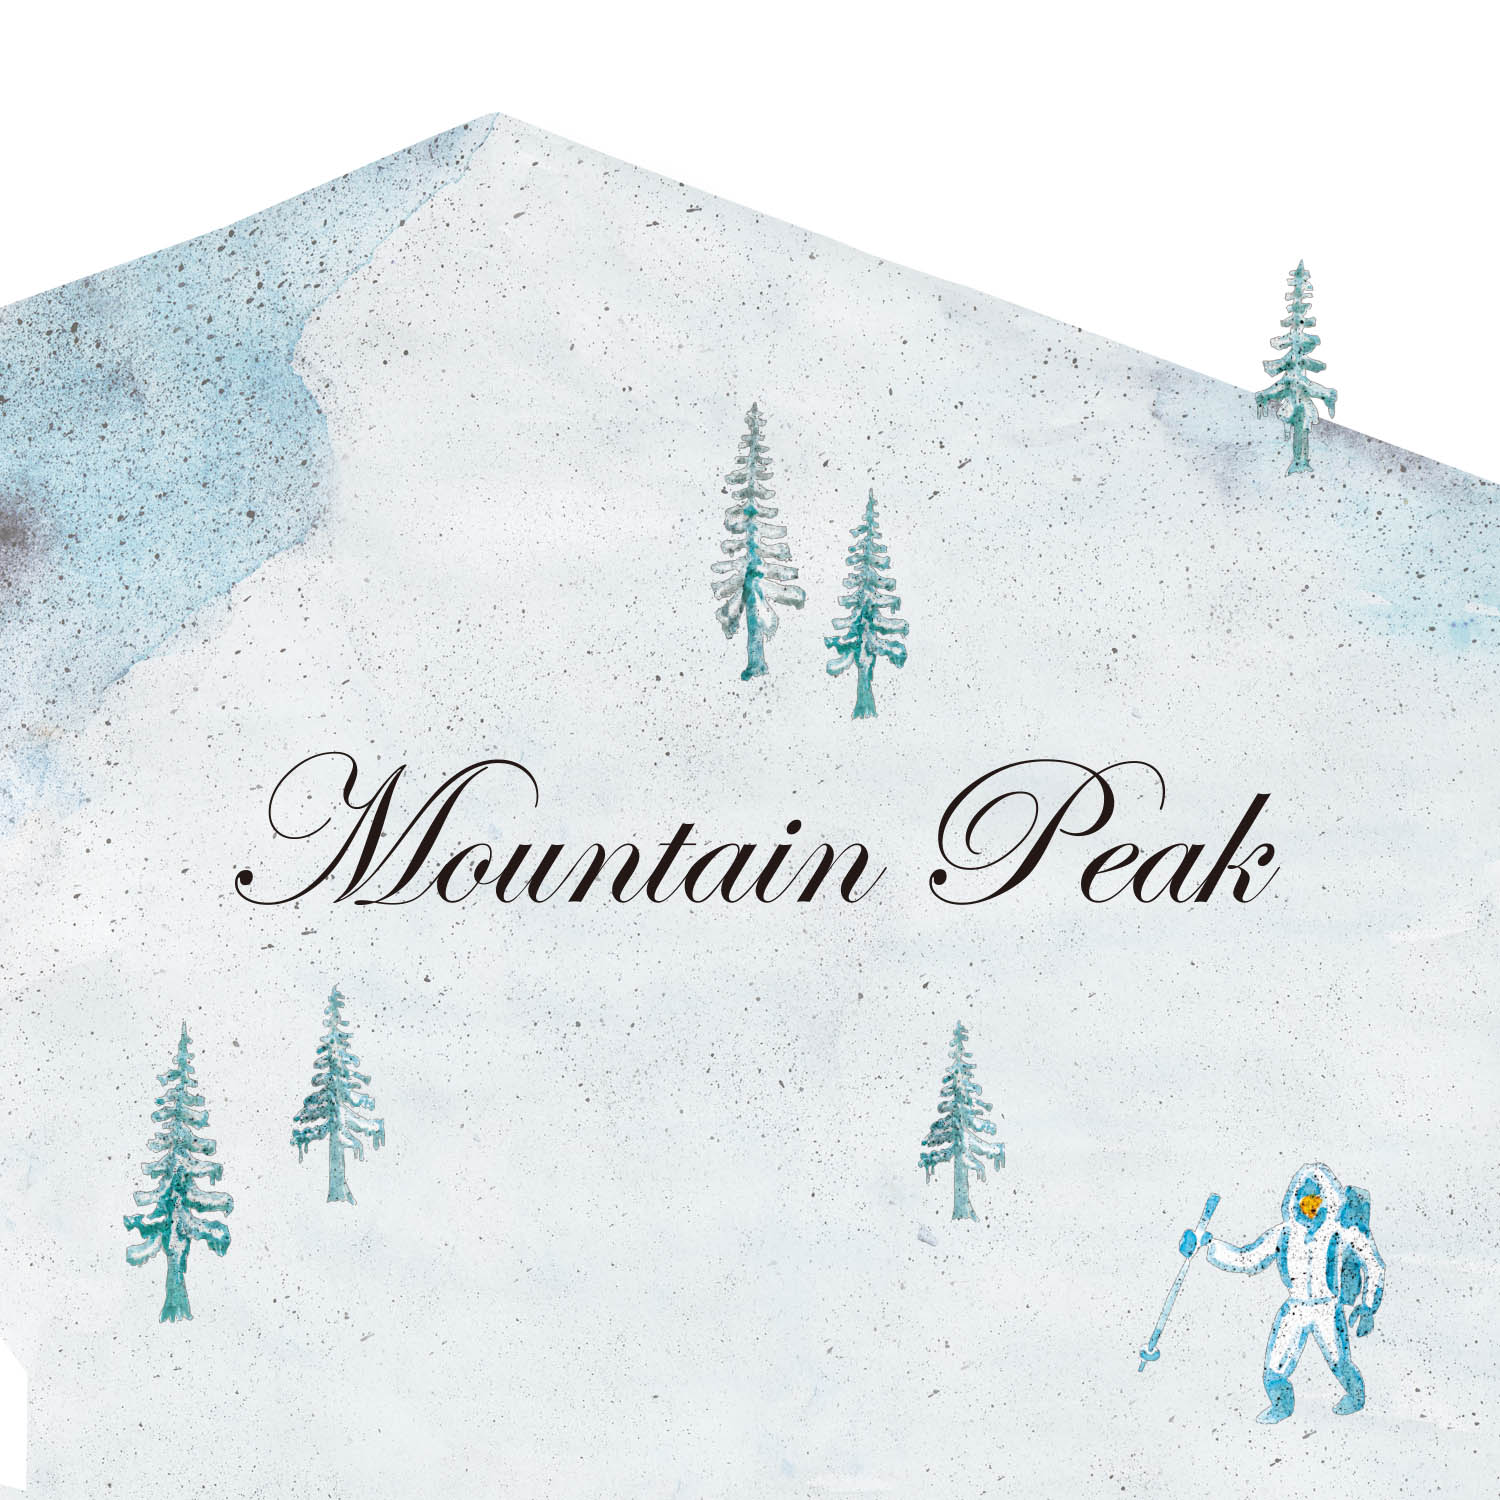 Mountain Peak マウンテンピーク 冬